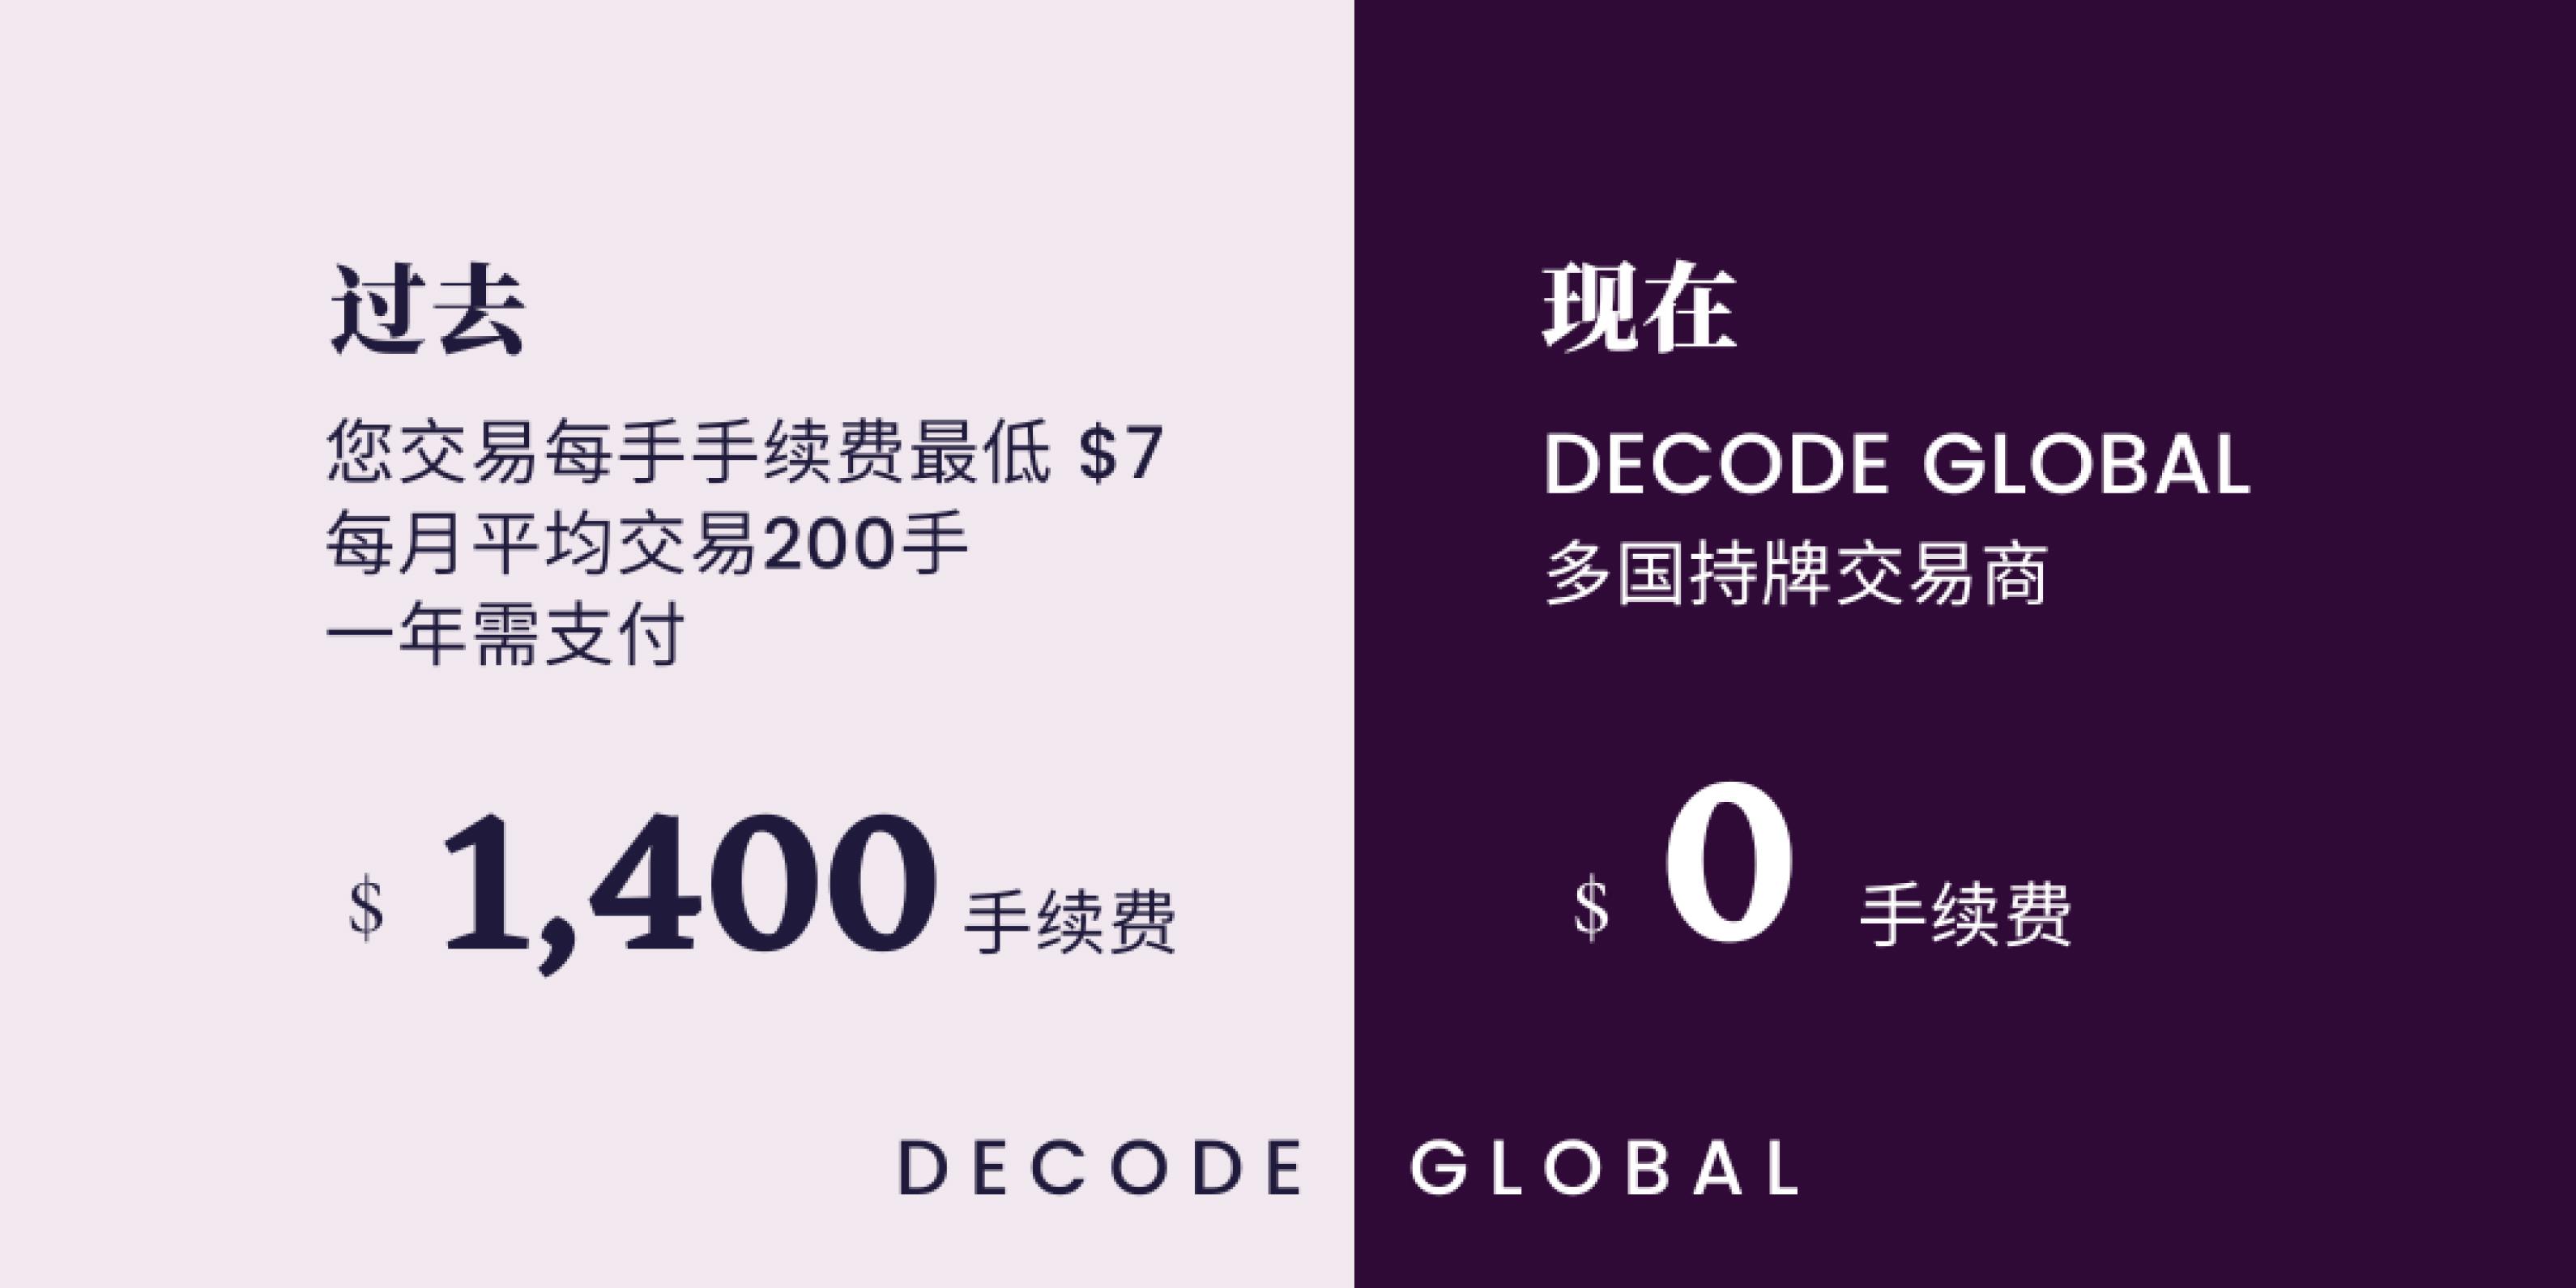 Decodefx 零手续费回馈用户 助力资产增值